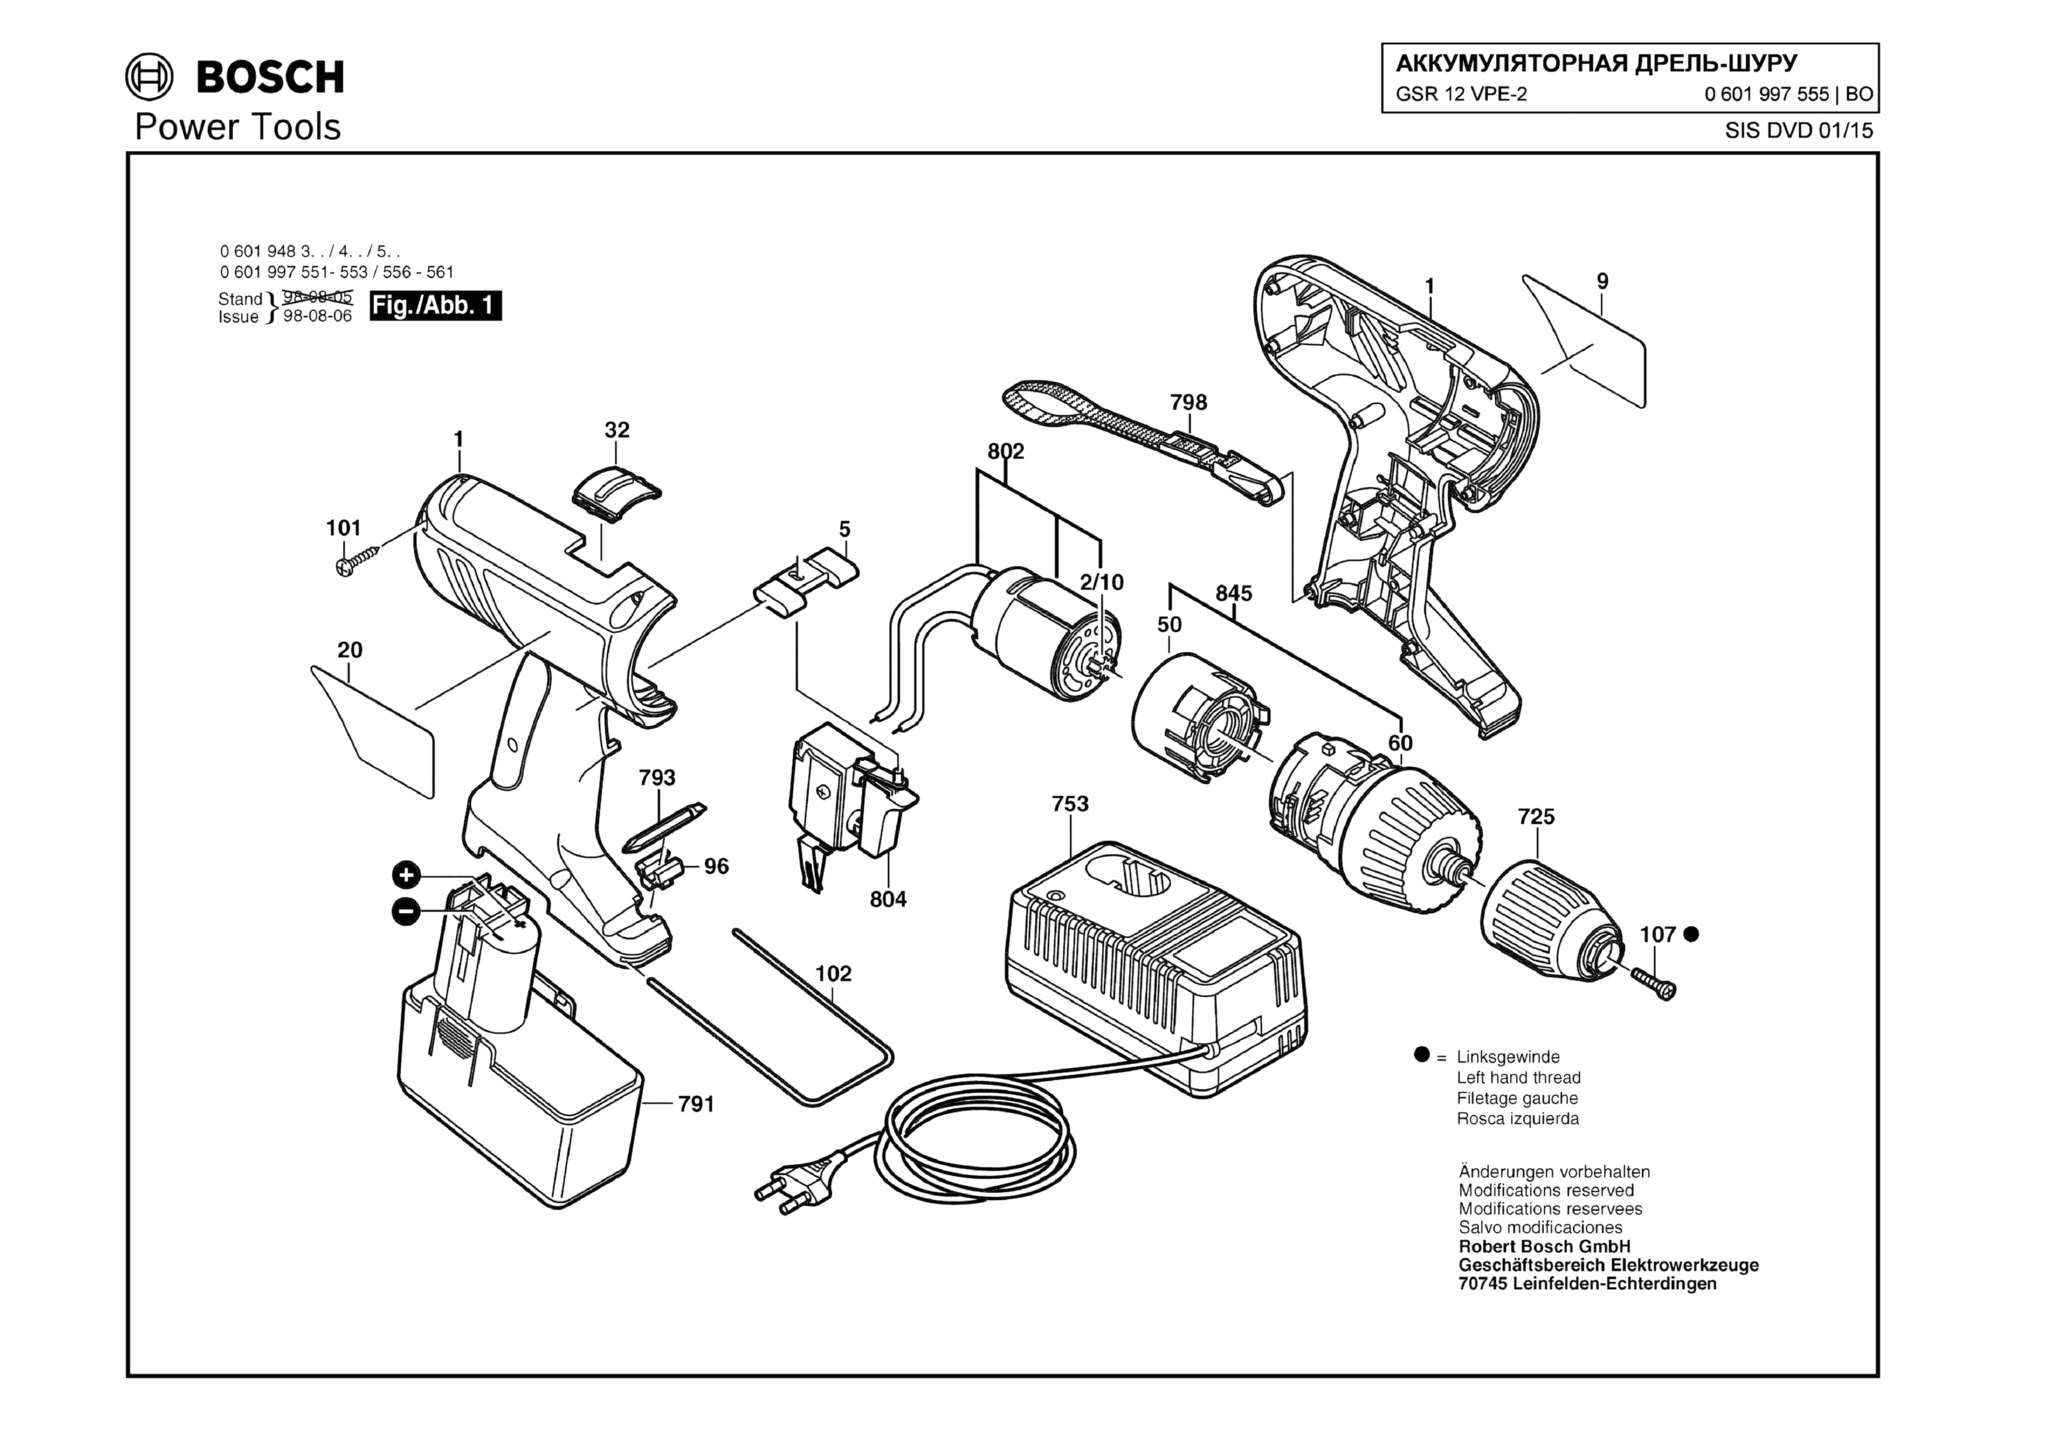 Запчасти, схема и деталировка Bosch GSR 12 VPE-2 (ТИП 0601997555)